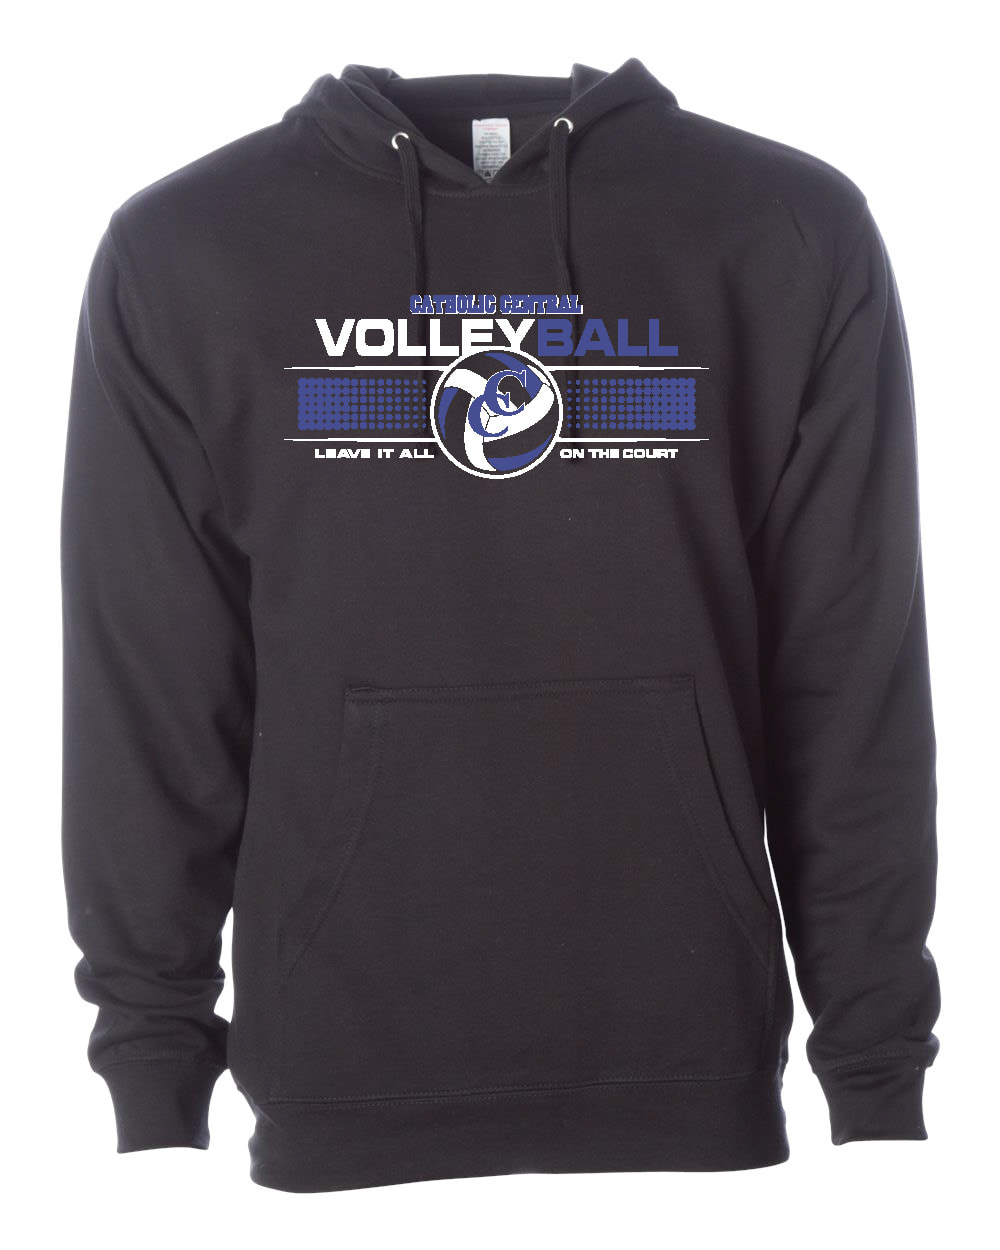 CC Volleyball Black Hooded Sweatshirt